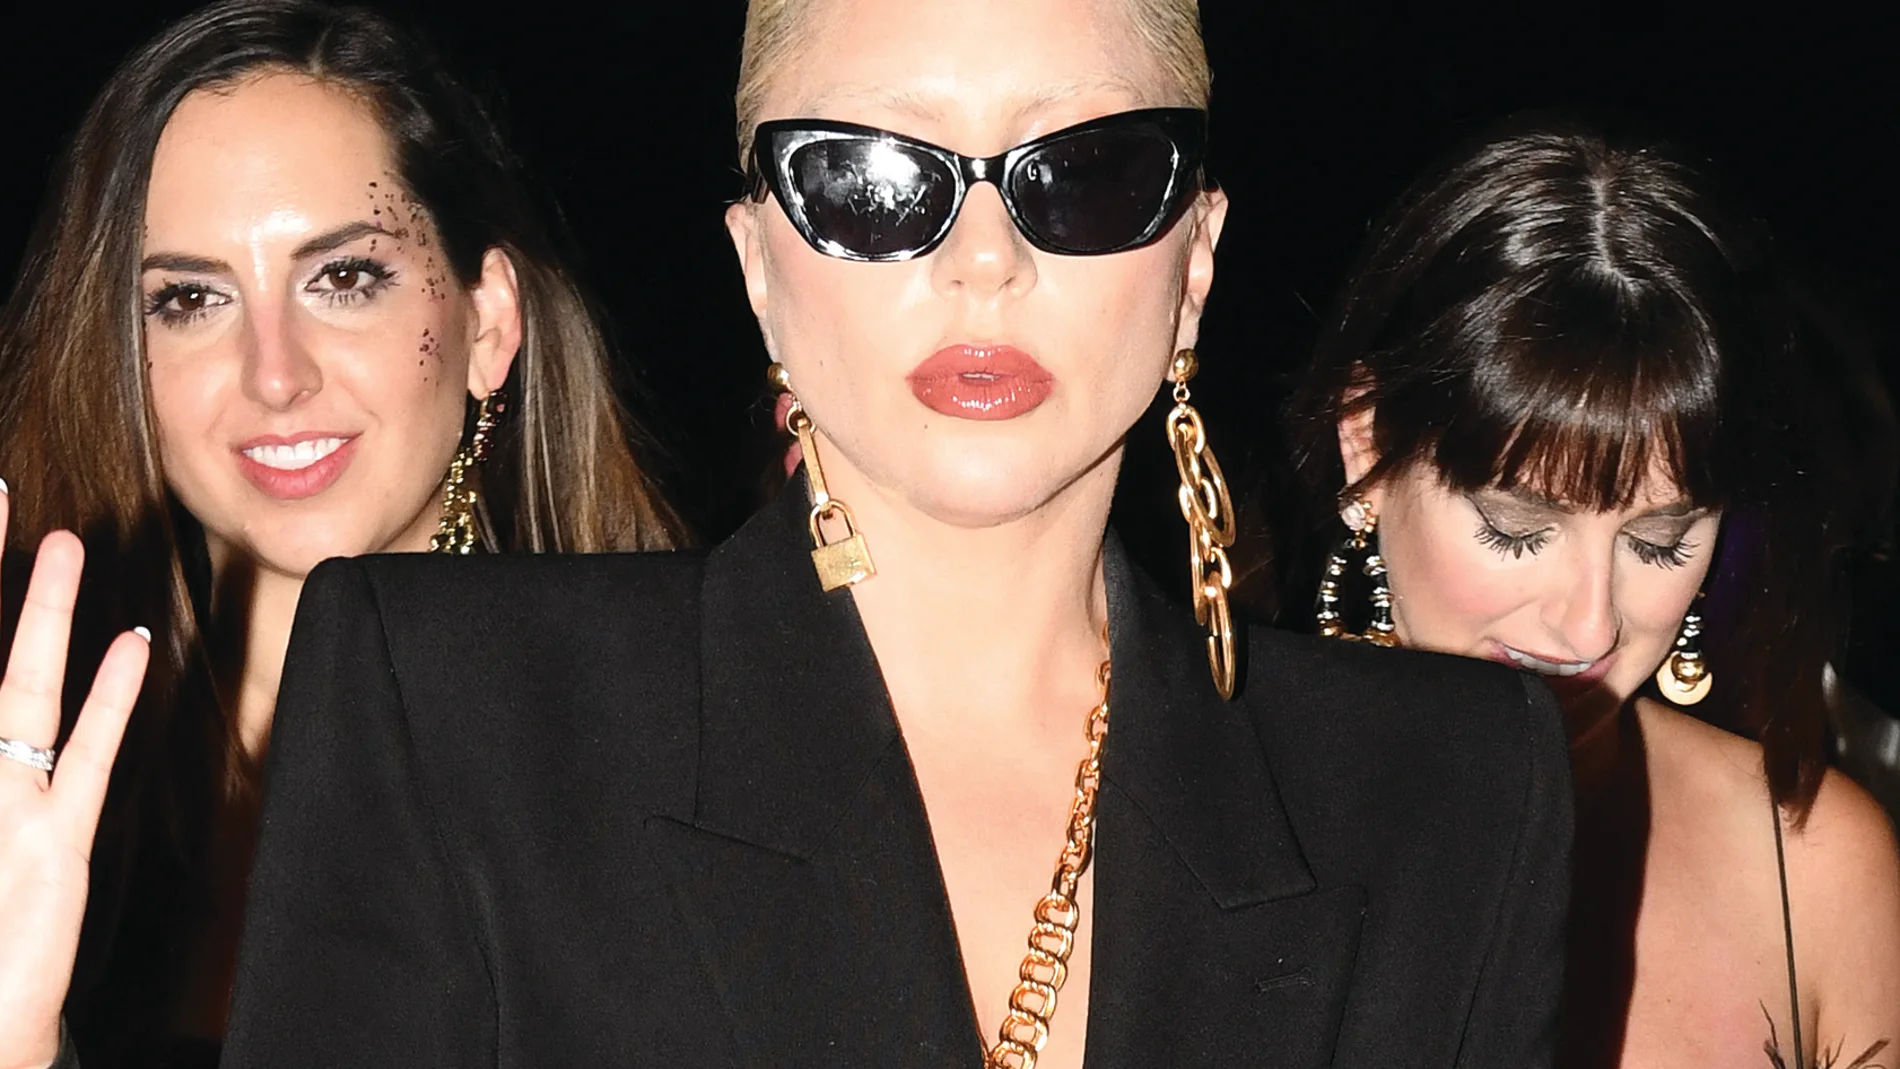 Singer Lady Gaga in Miami.16 Sep 2022